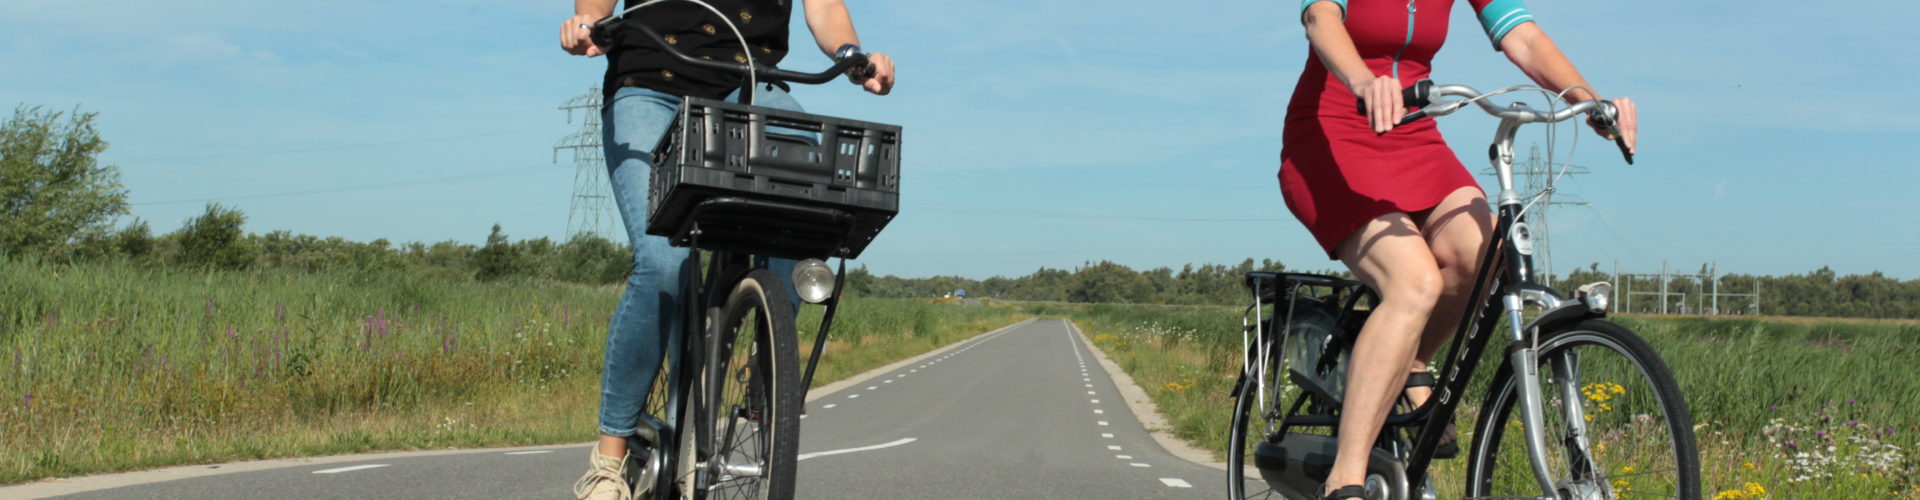 Cycling through the Biesbosch